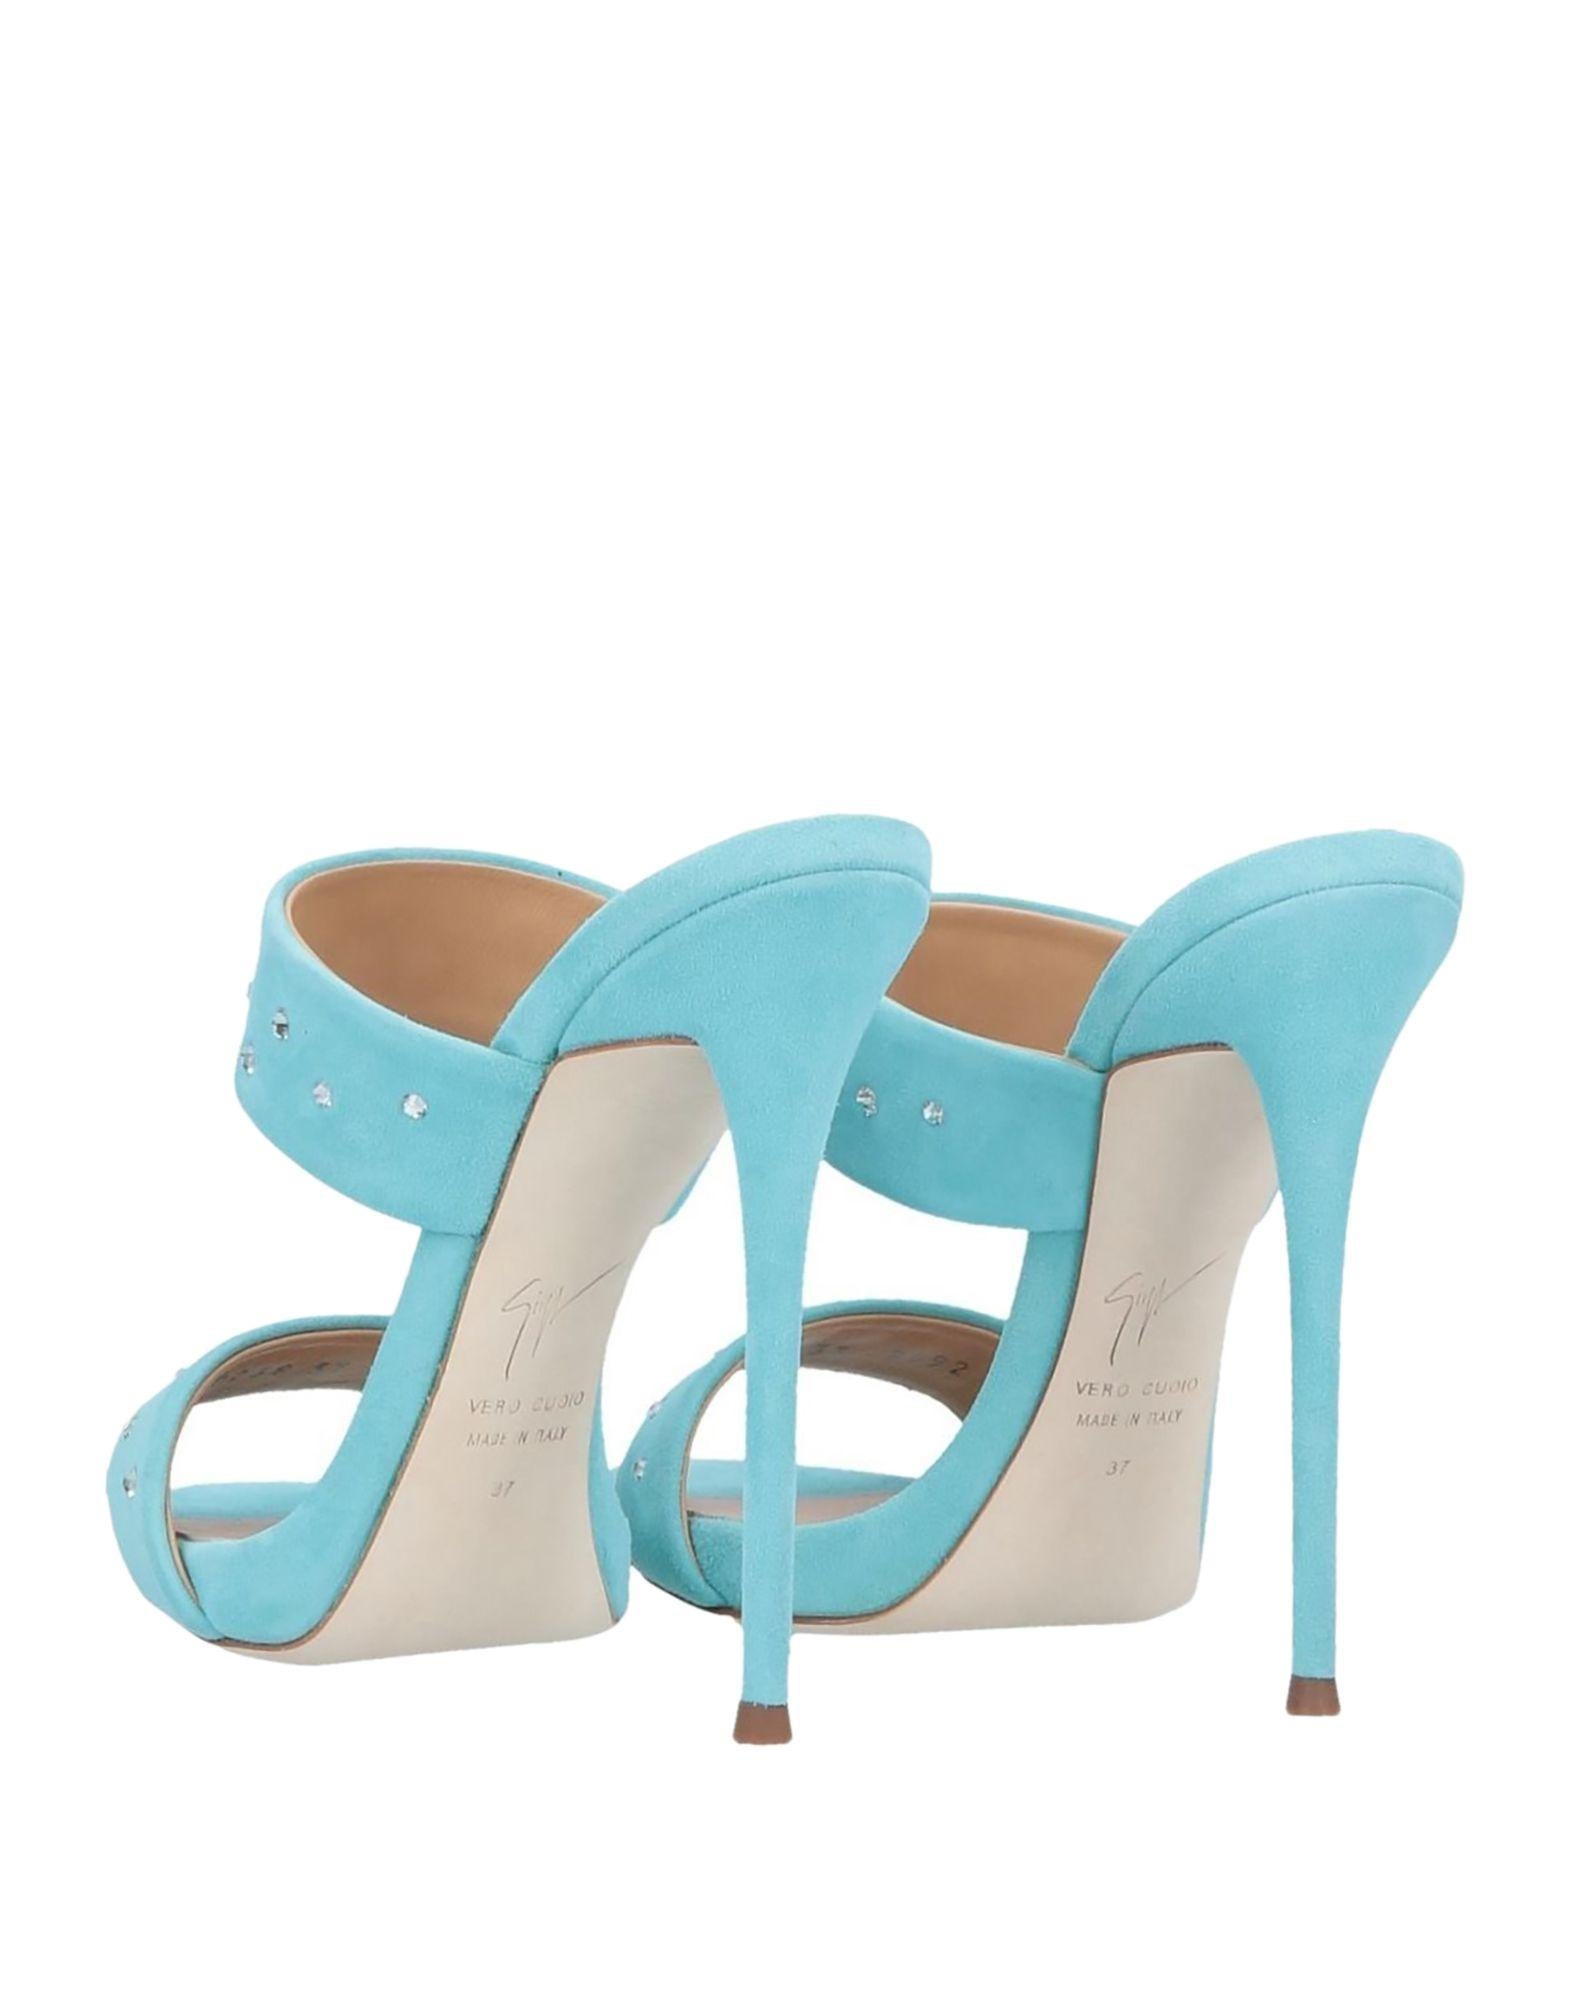 Women's Giuseppe Zanotti NEW Blue Suede Slides Mules Evening Sandals Heels in Box